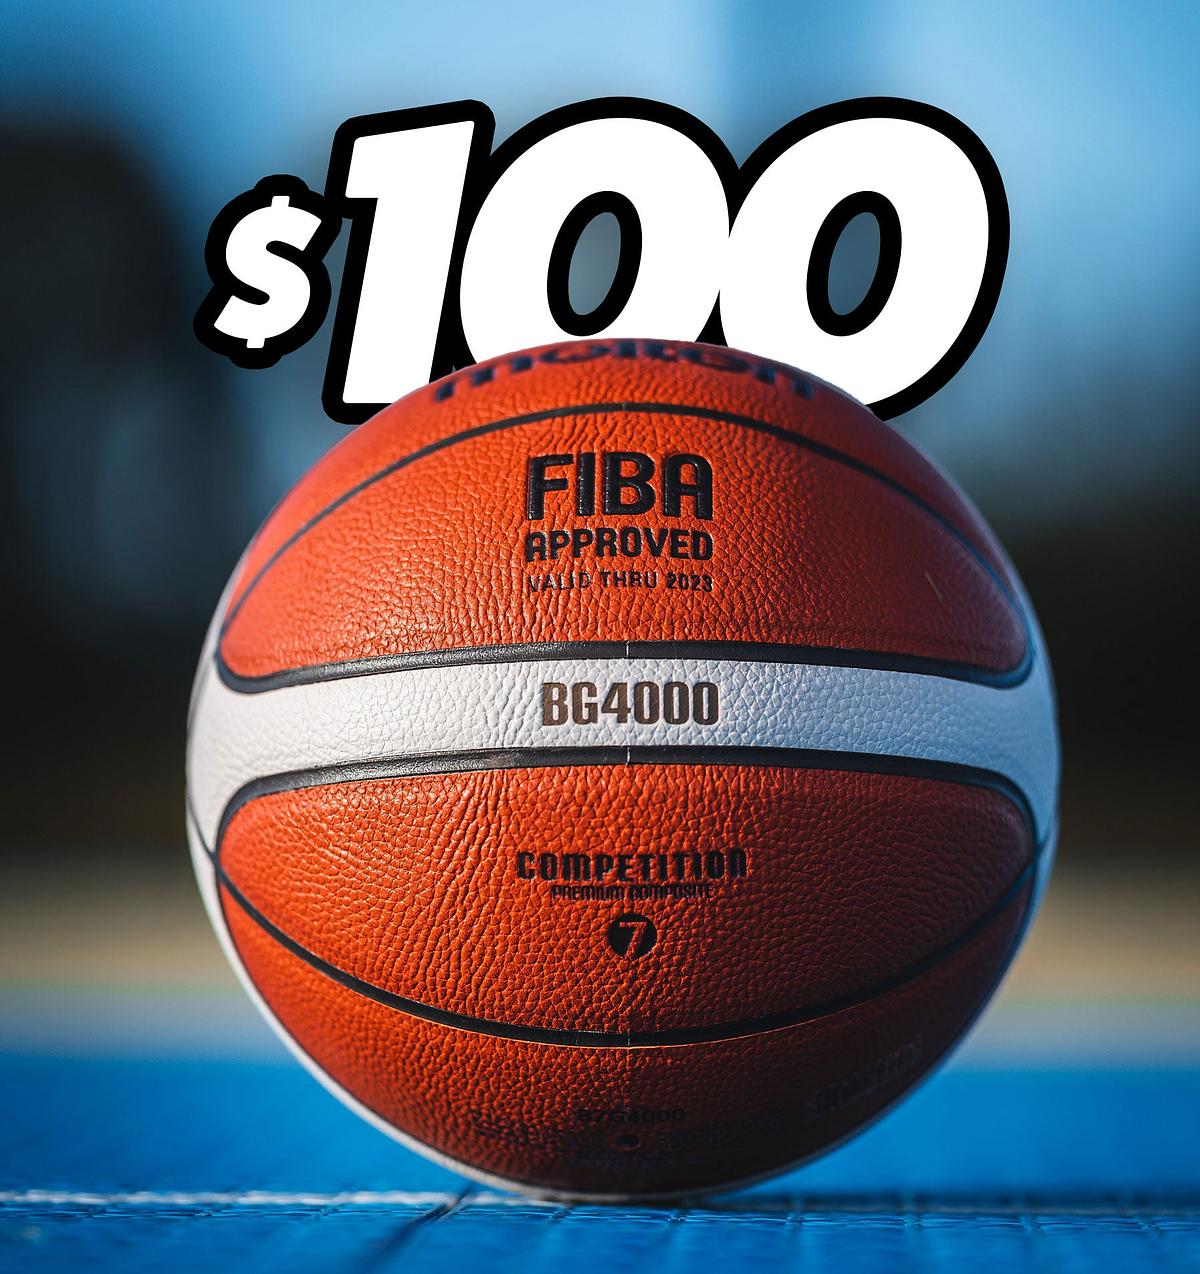 Molten BG4000 Basketball buy at